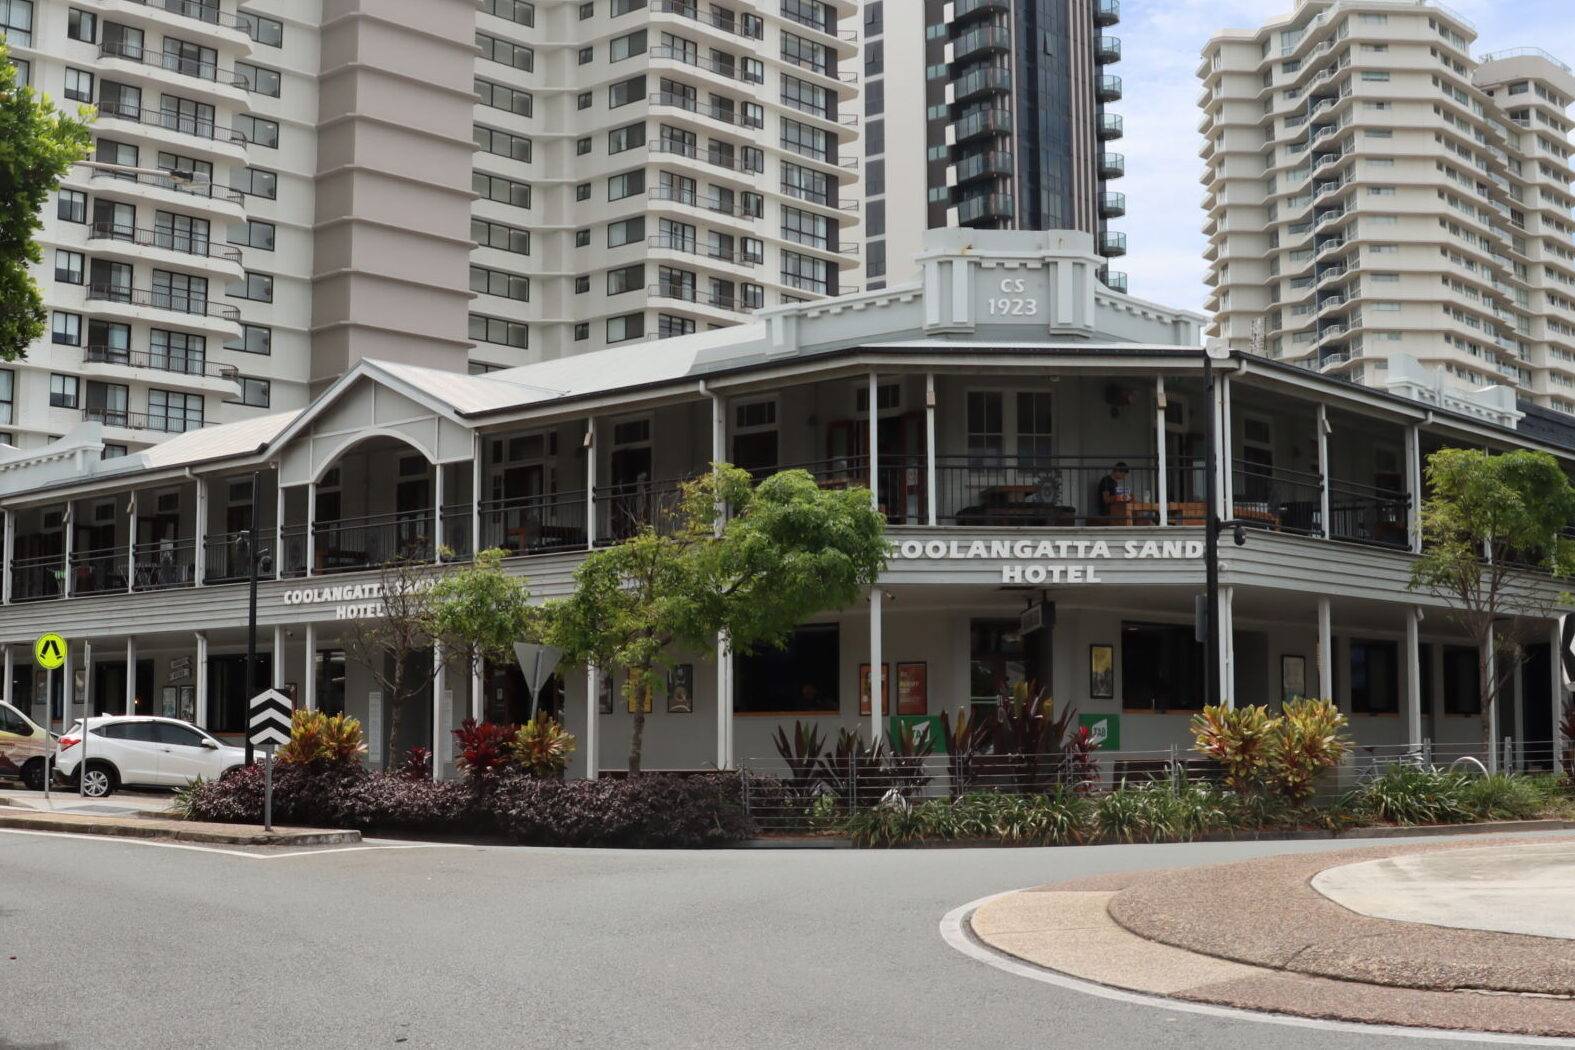 Coolangatta Sands Hotel , Coolangatta, Queensland 4221